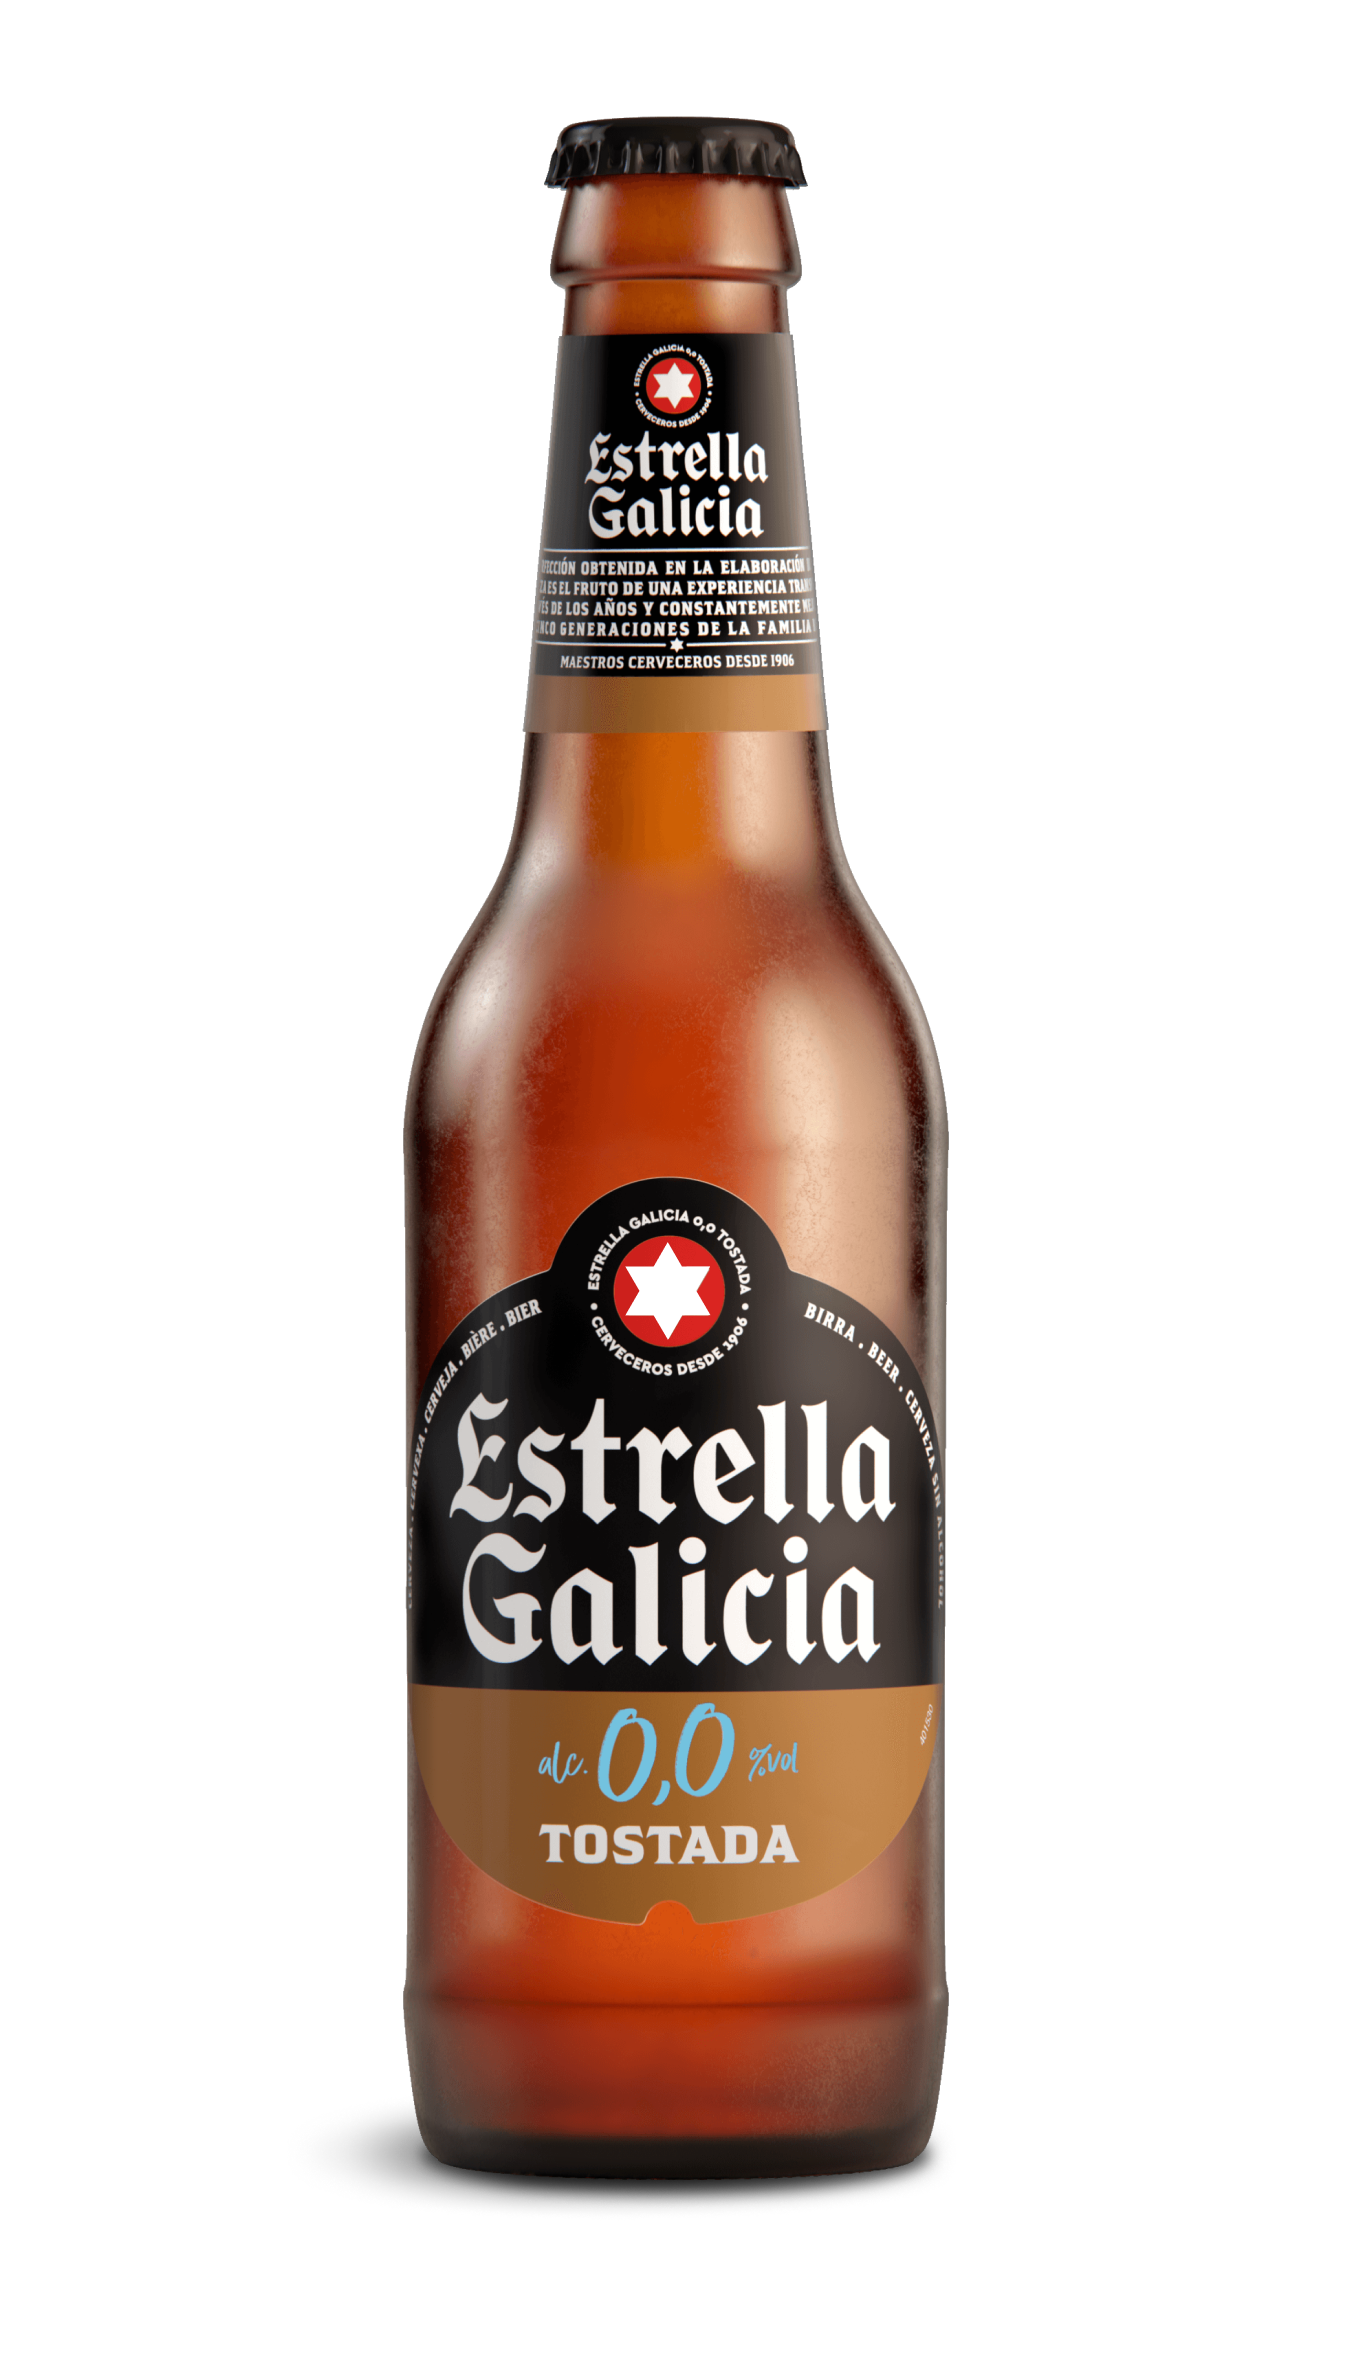 Estrella Galicia 00 Tostada